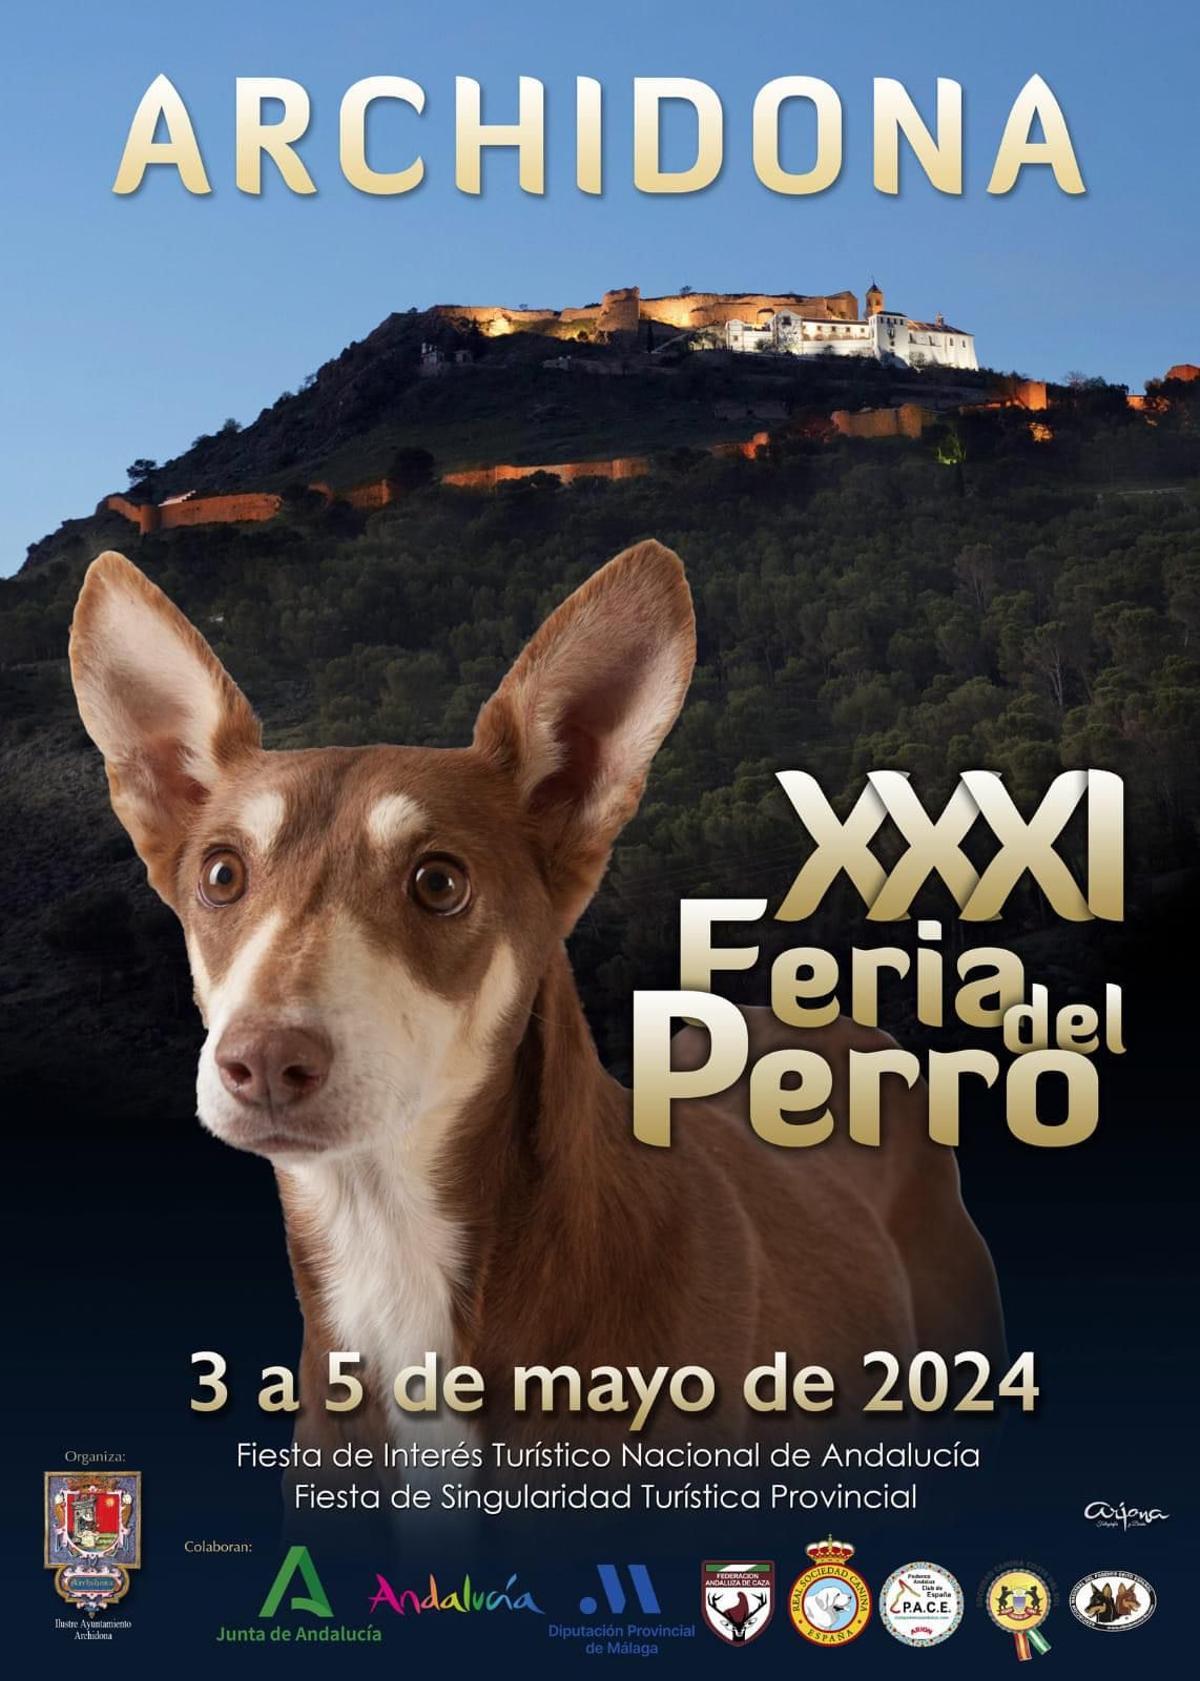 Cartel de la Feria del Perro de Archidona 2024.